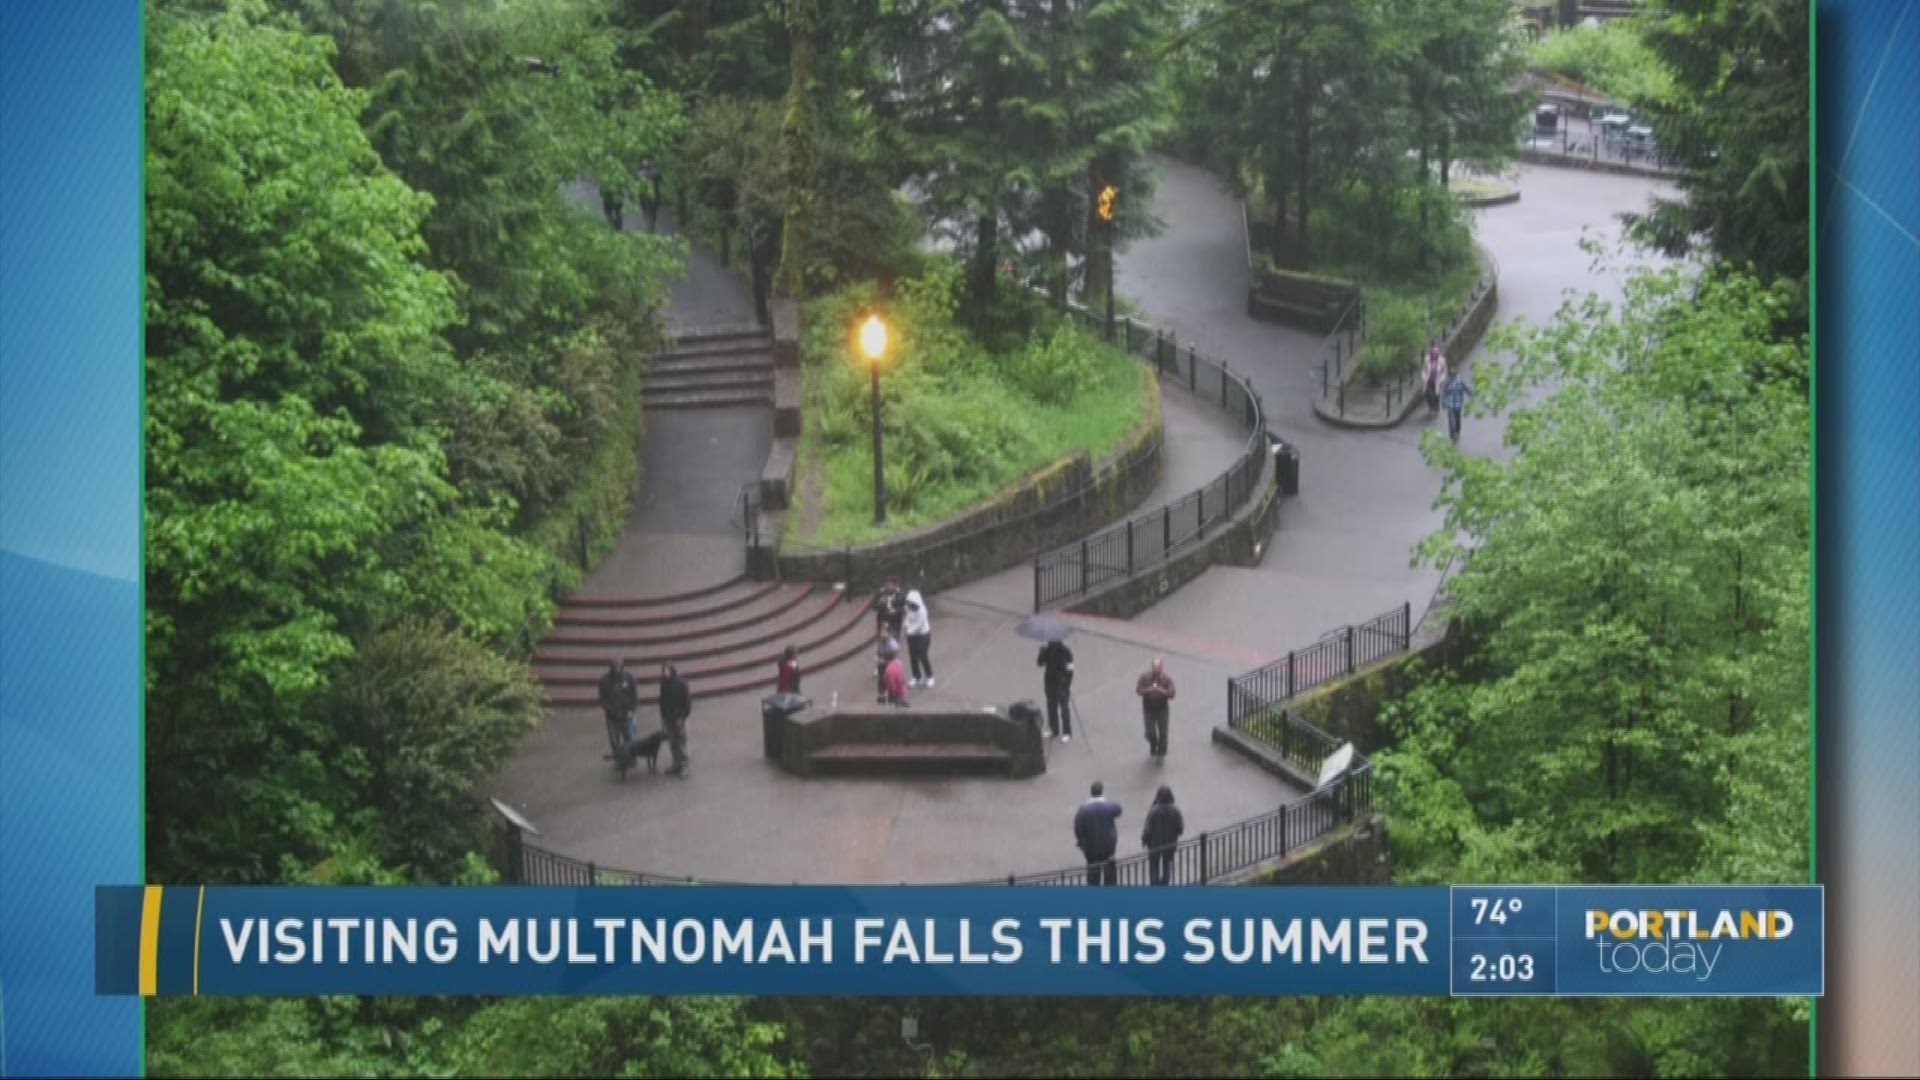 Visiting Multnomah Falls this summer